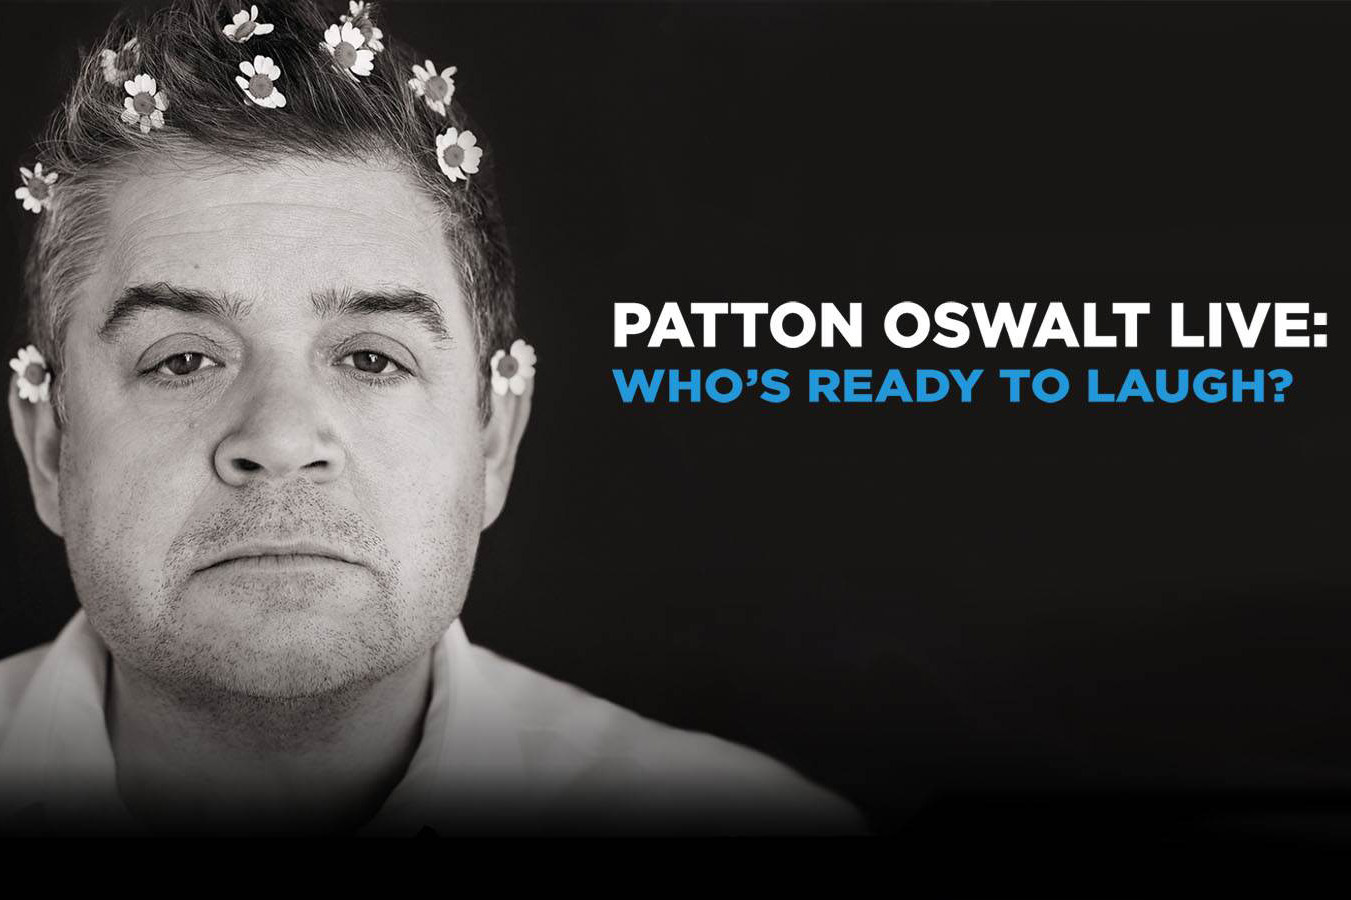 Patton Oswalt Live: Who’s Ready to Laugh? 9.17